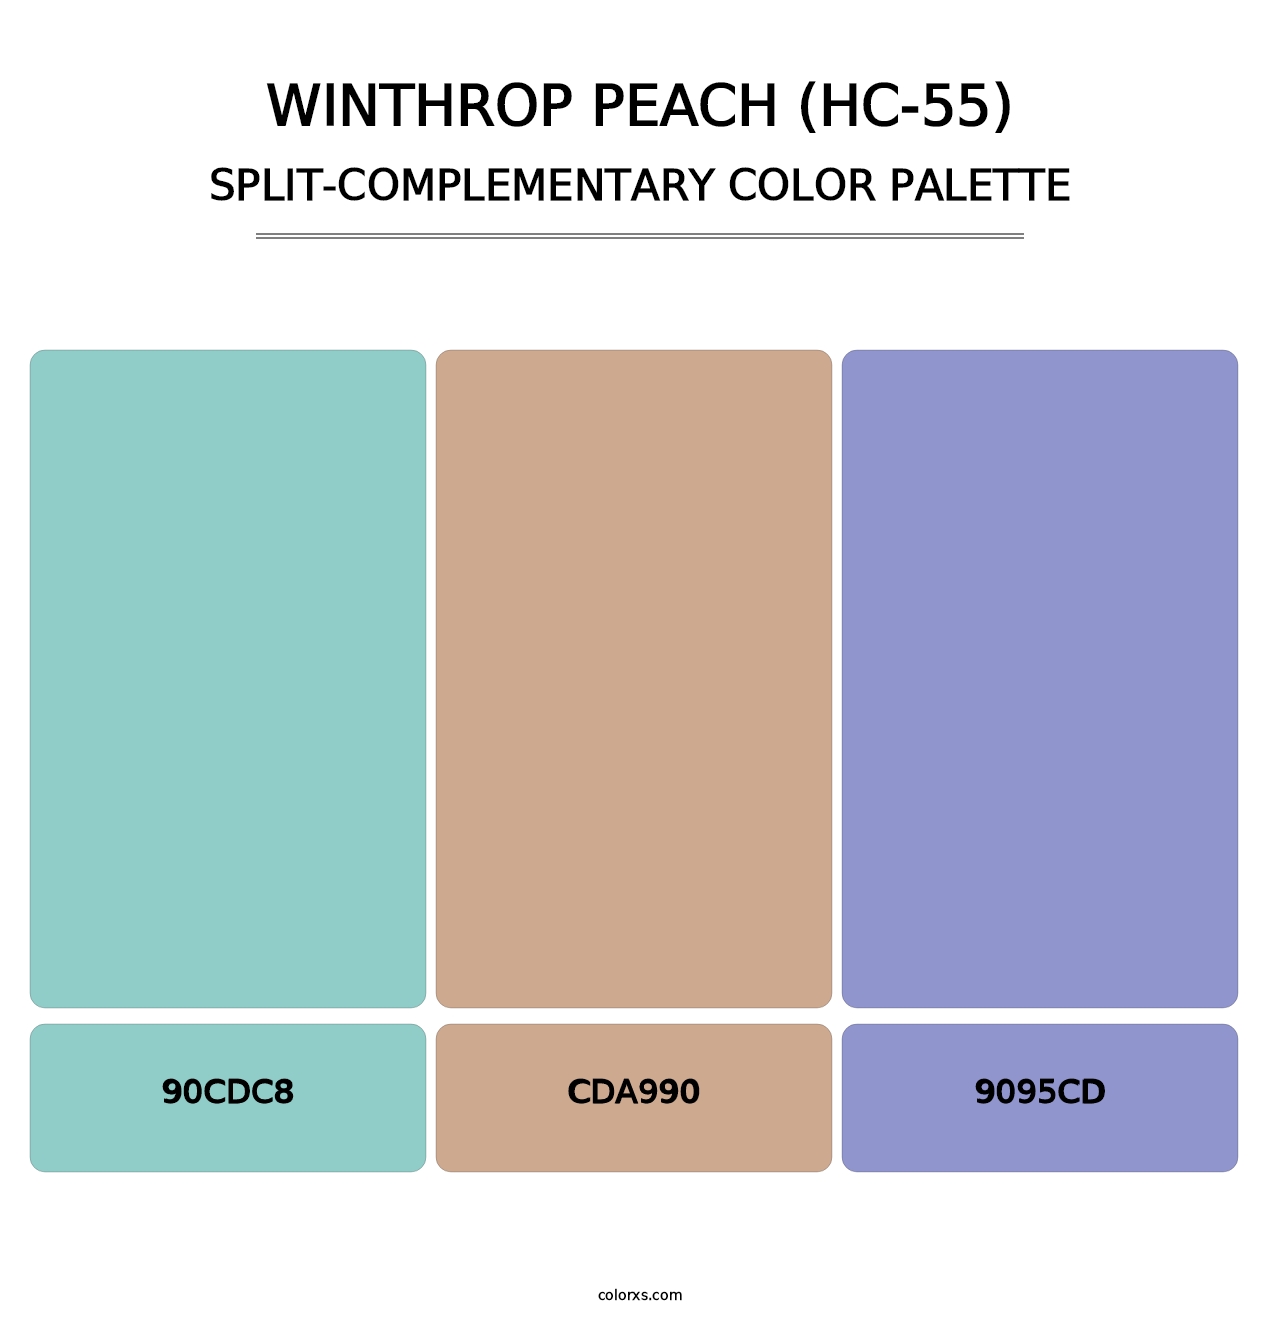 Winthrop Peach (HC-55) - Split-Complementary Color Palette